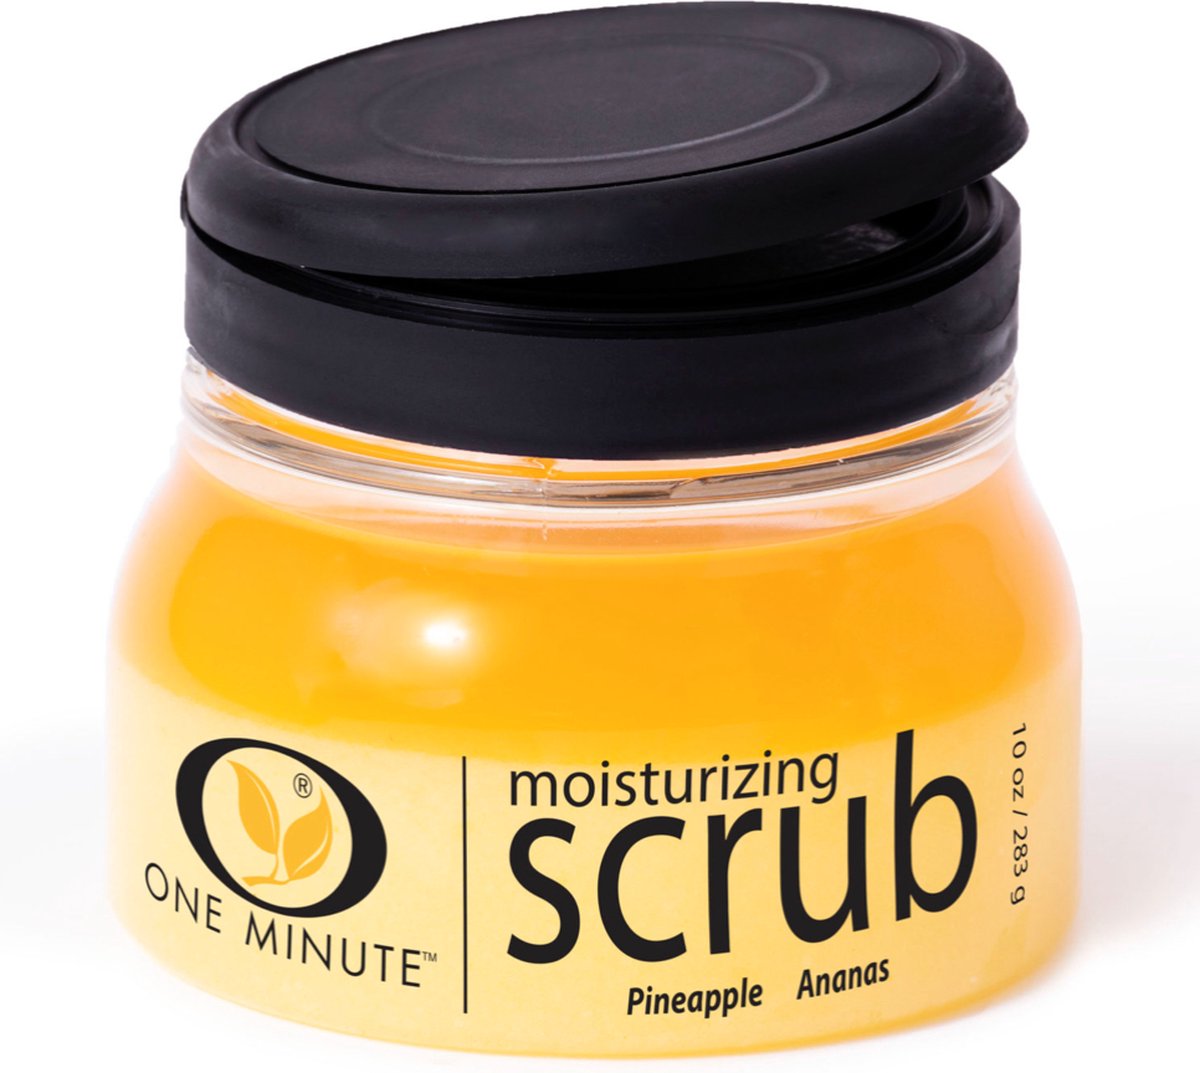 One Minute Manicure Scrub /Pineapple / 283 gr